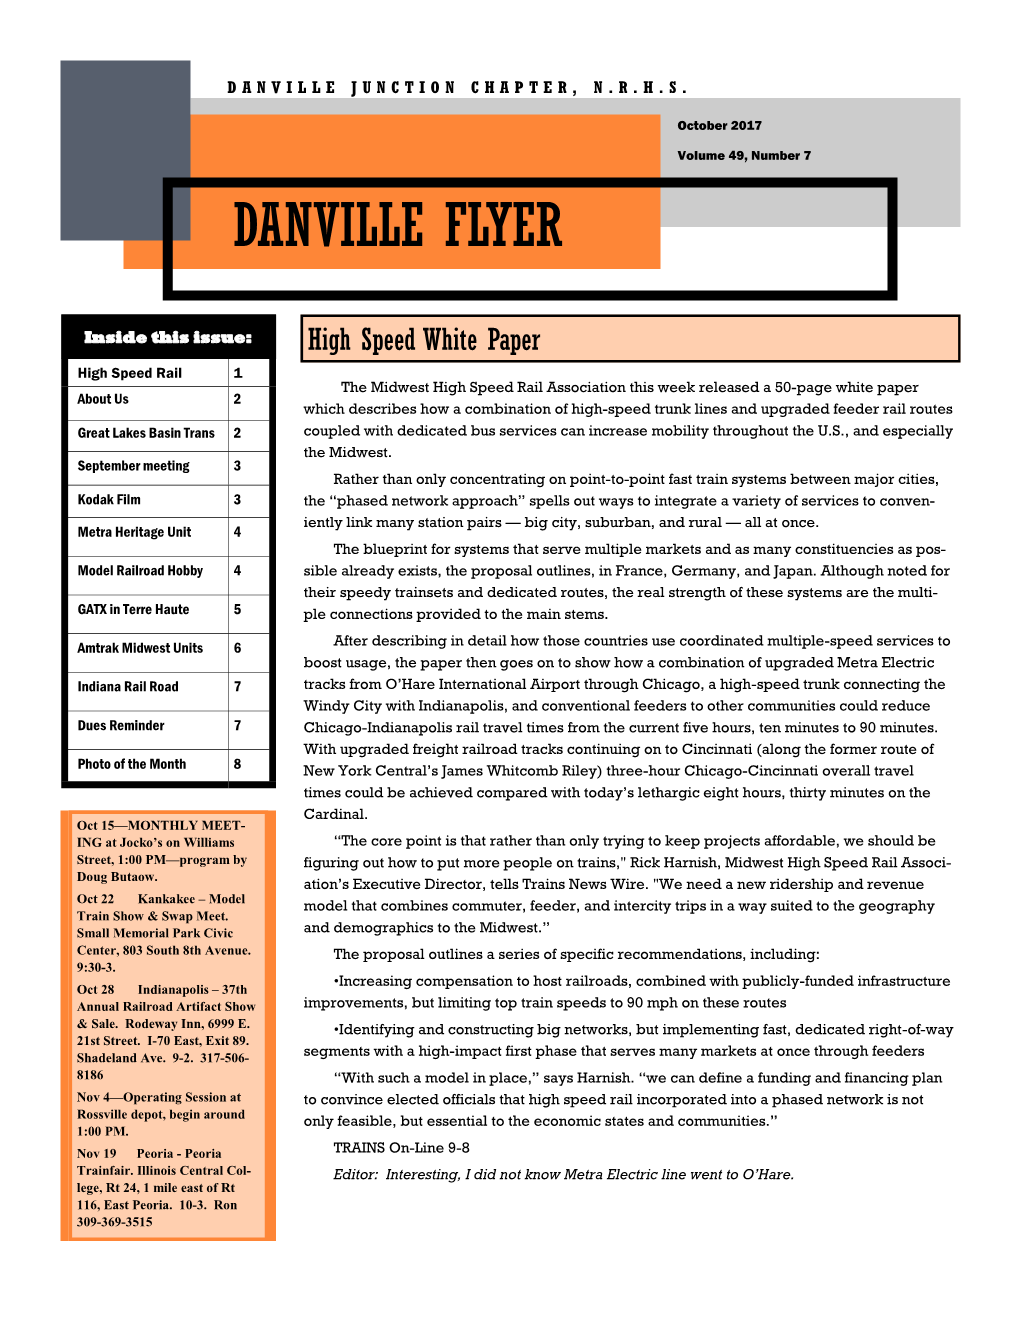 Danville Flyer